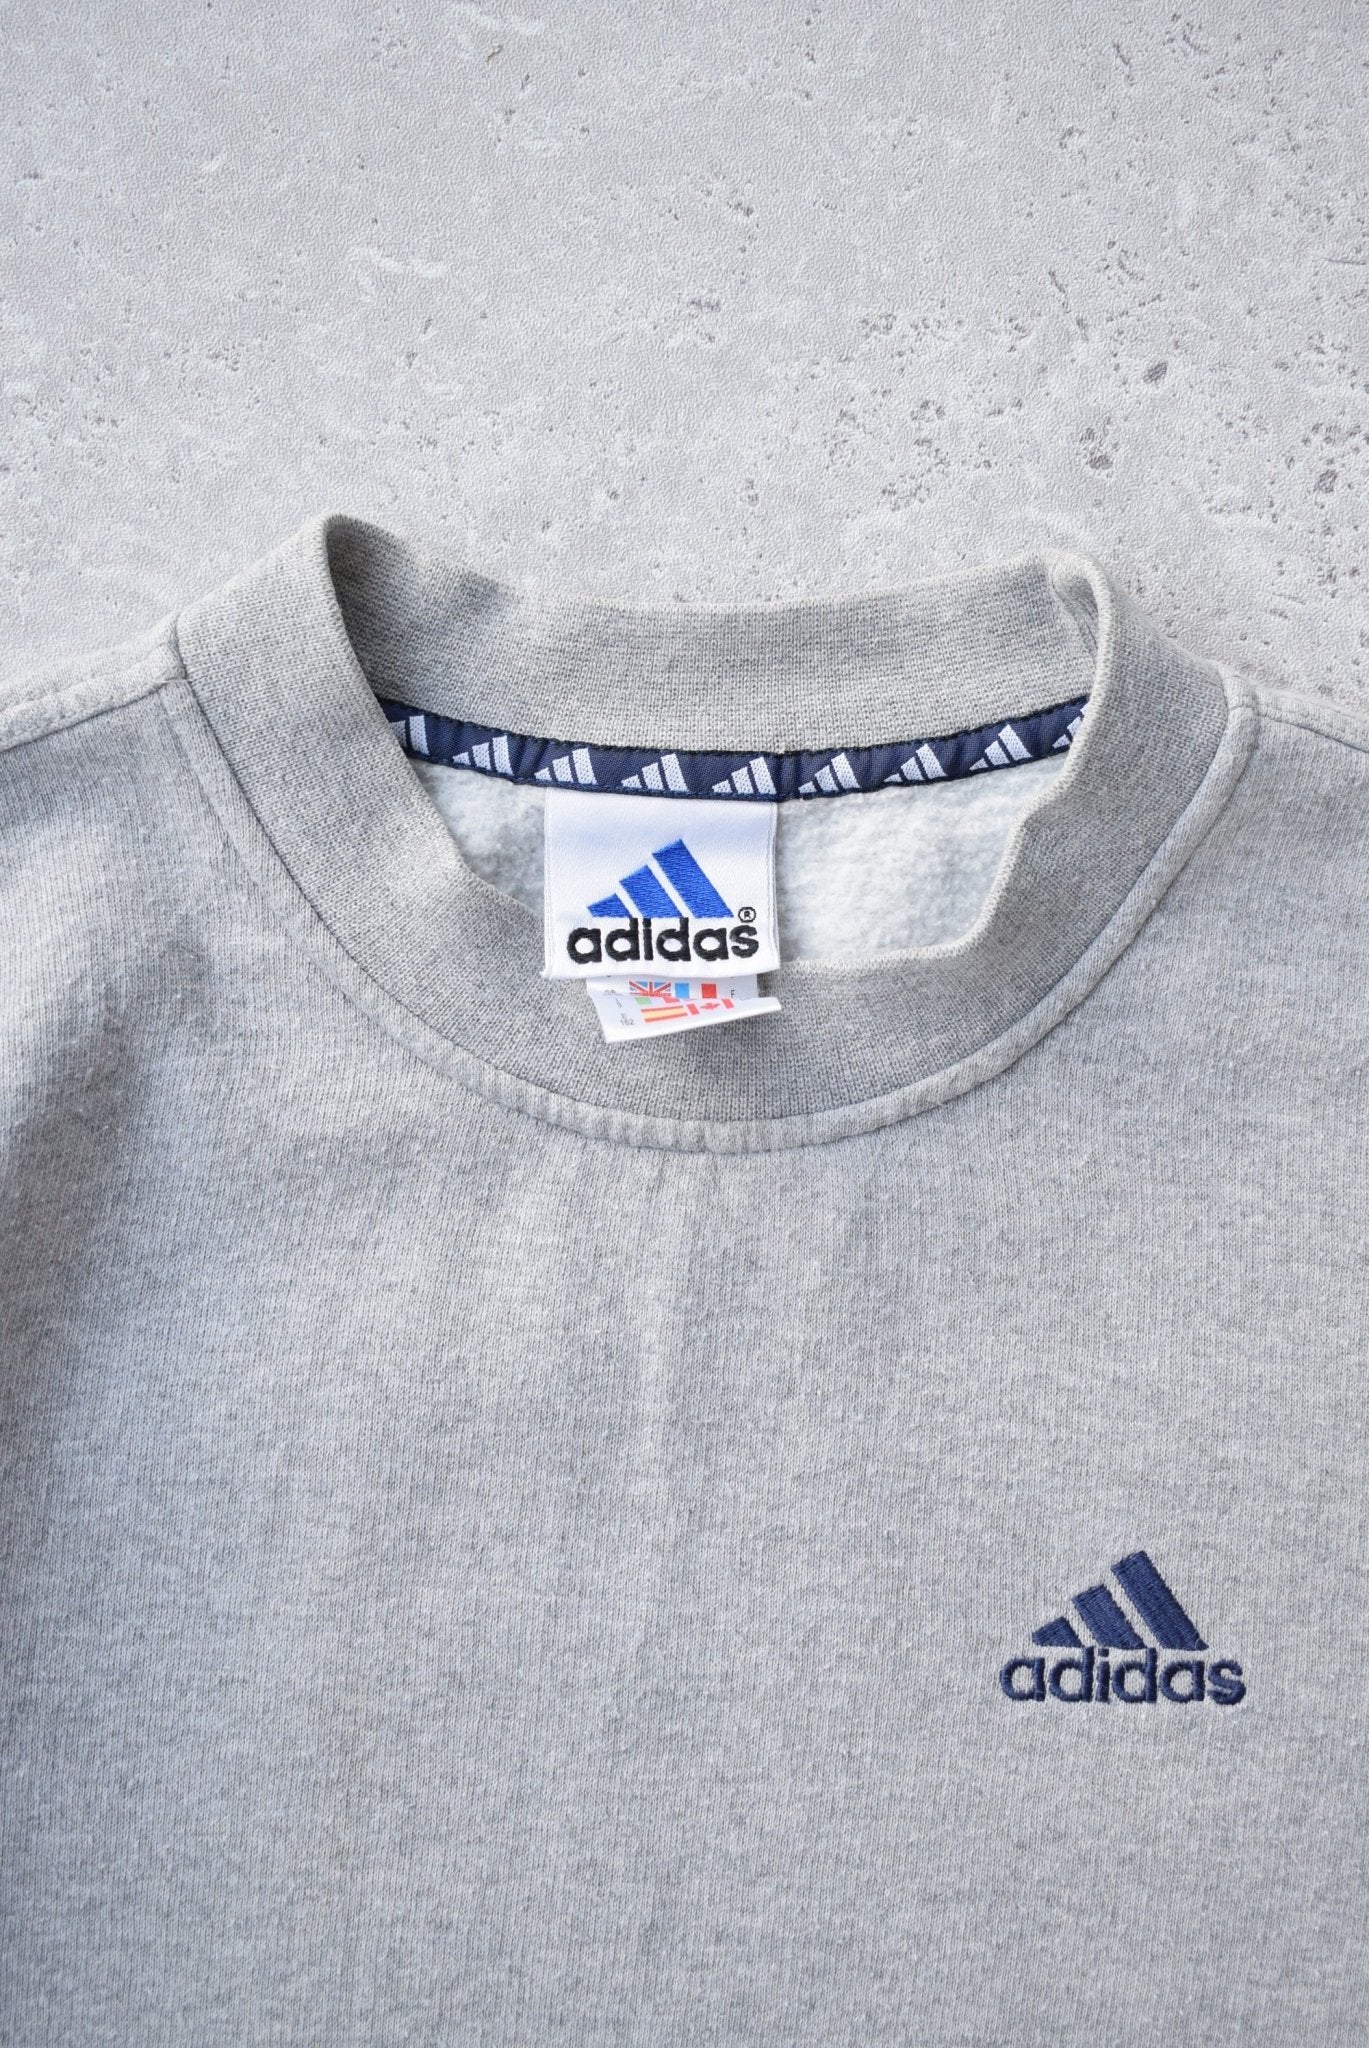 Vintage 90s Adidas Classic Logo Sqweater (S) - Retrospective Store